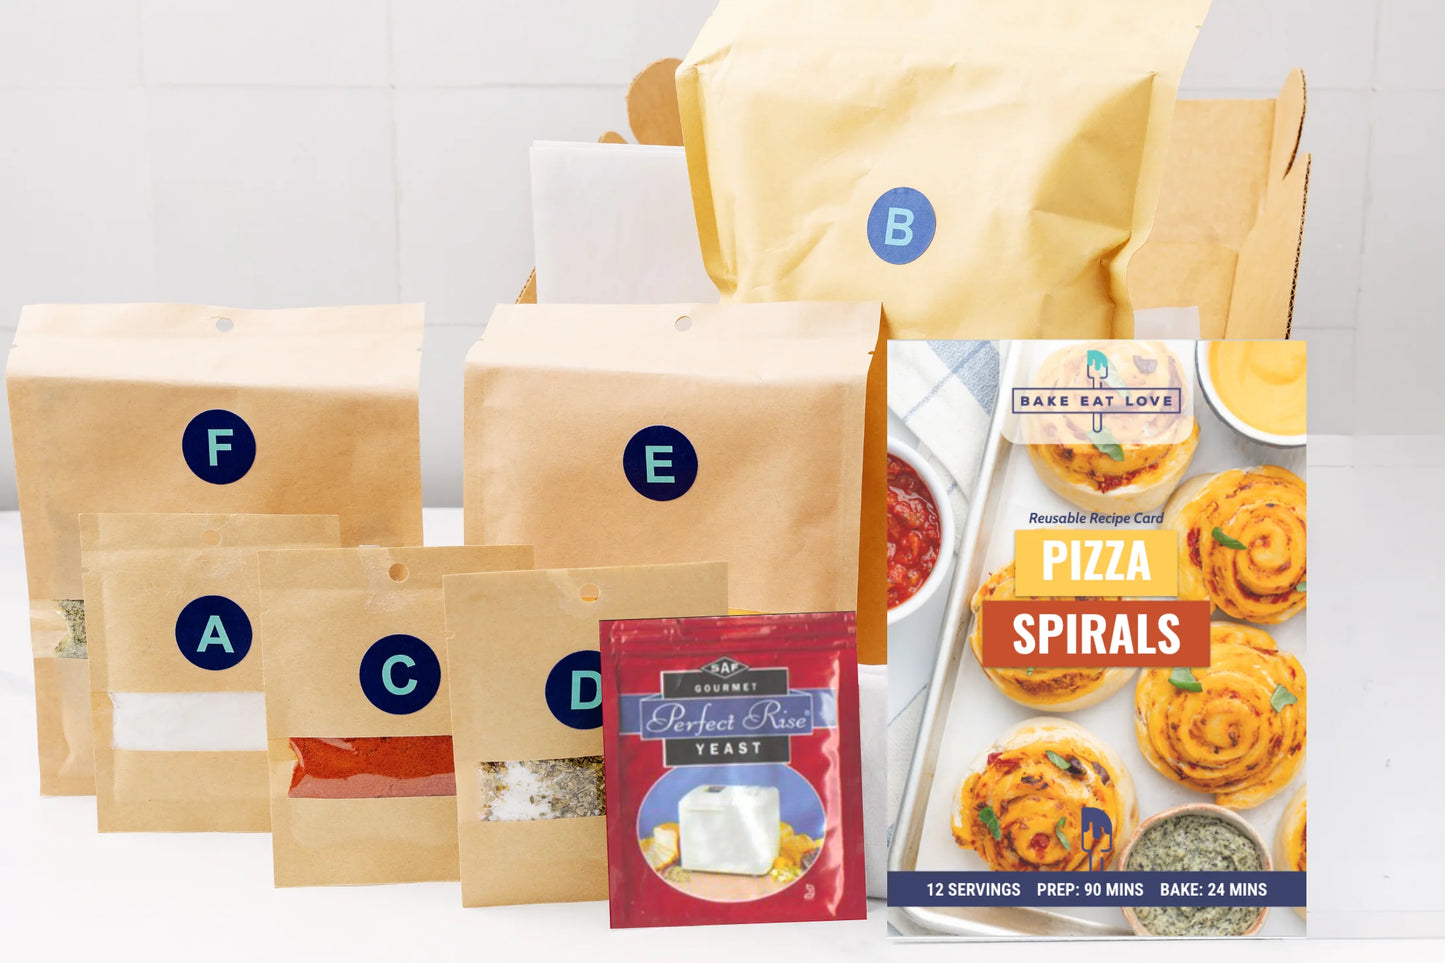 Kids' Baking Kit Bundle | No artificial dyes | Eco friendly packaging